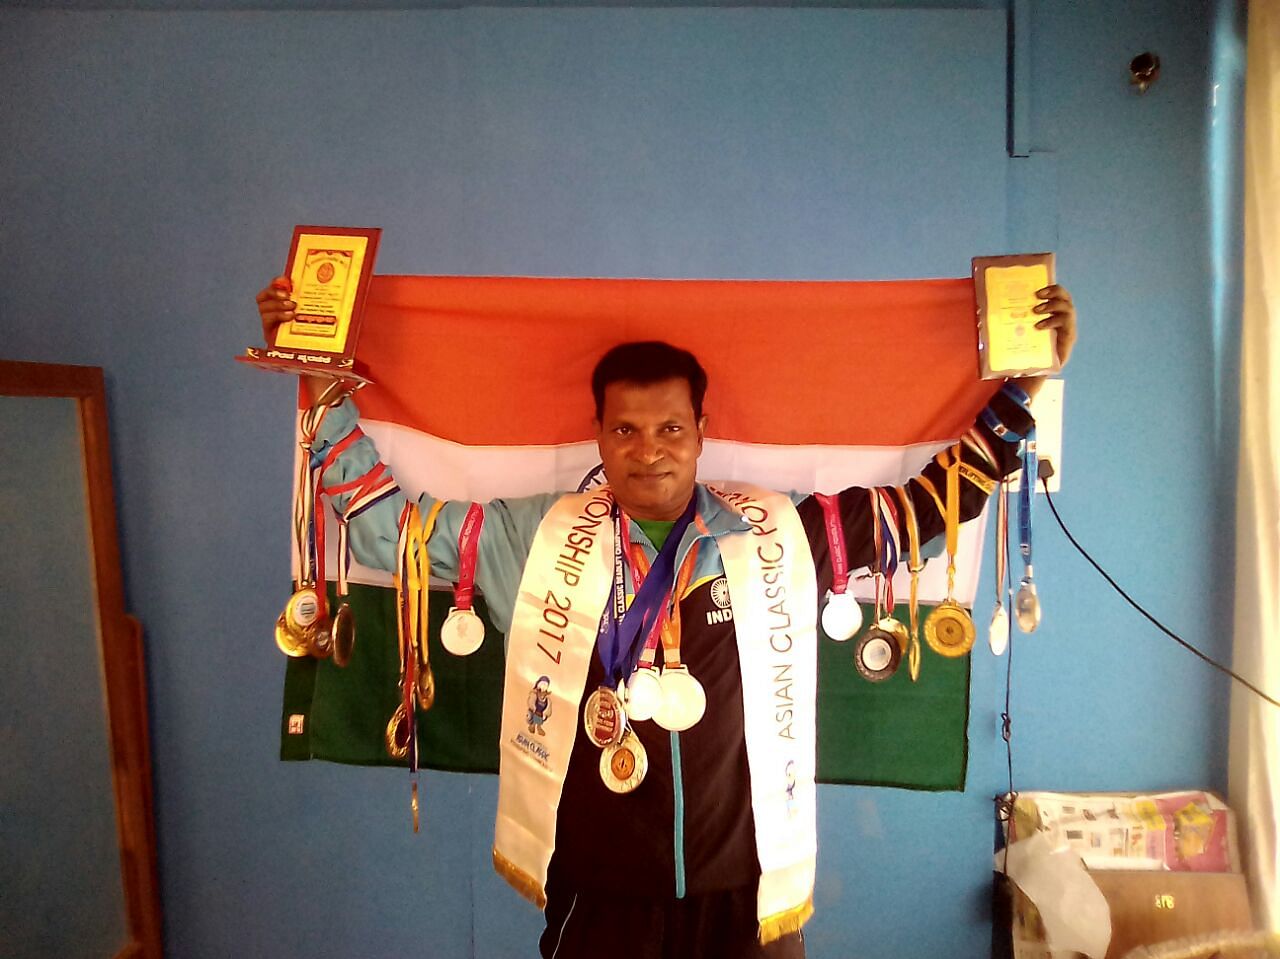 N Eshwara has 50 gold medals for powerlifting.